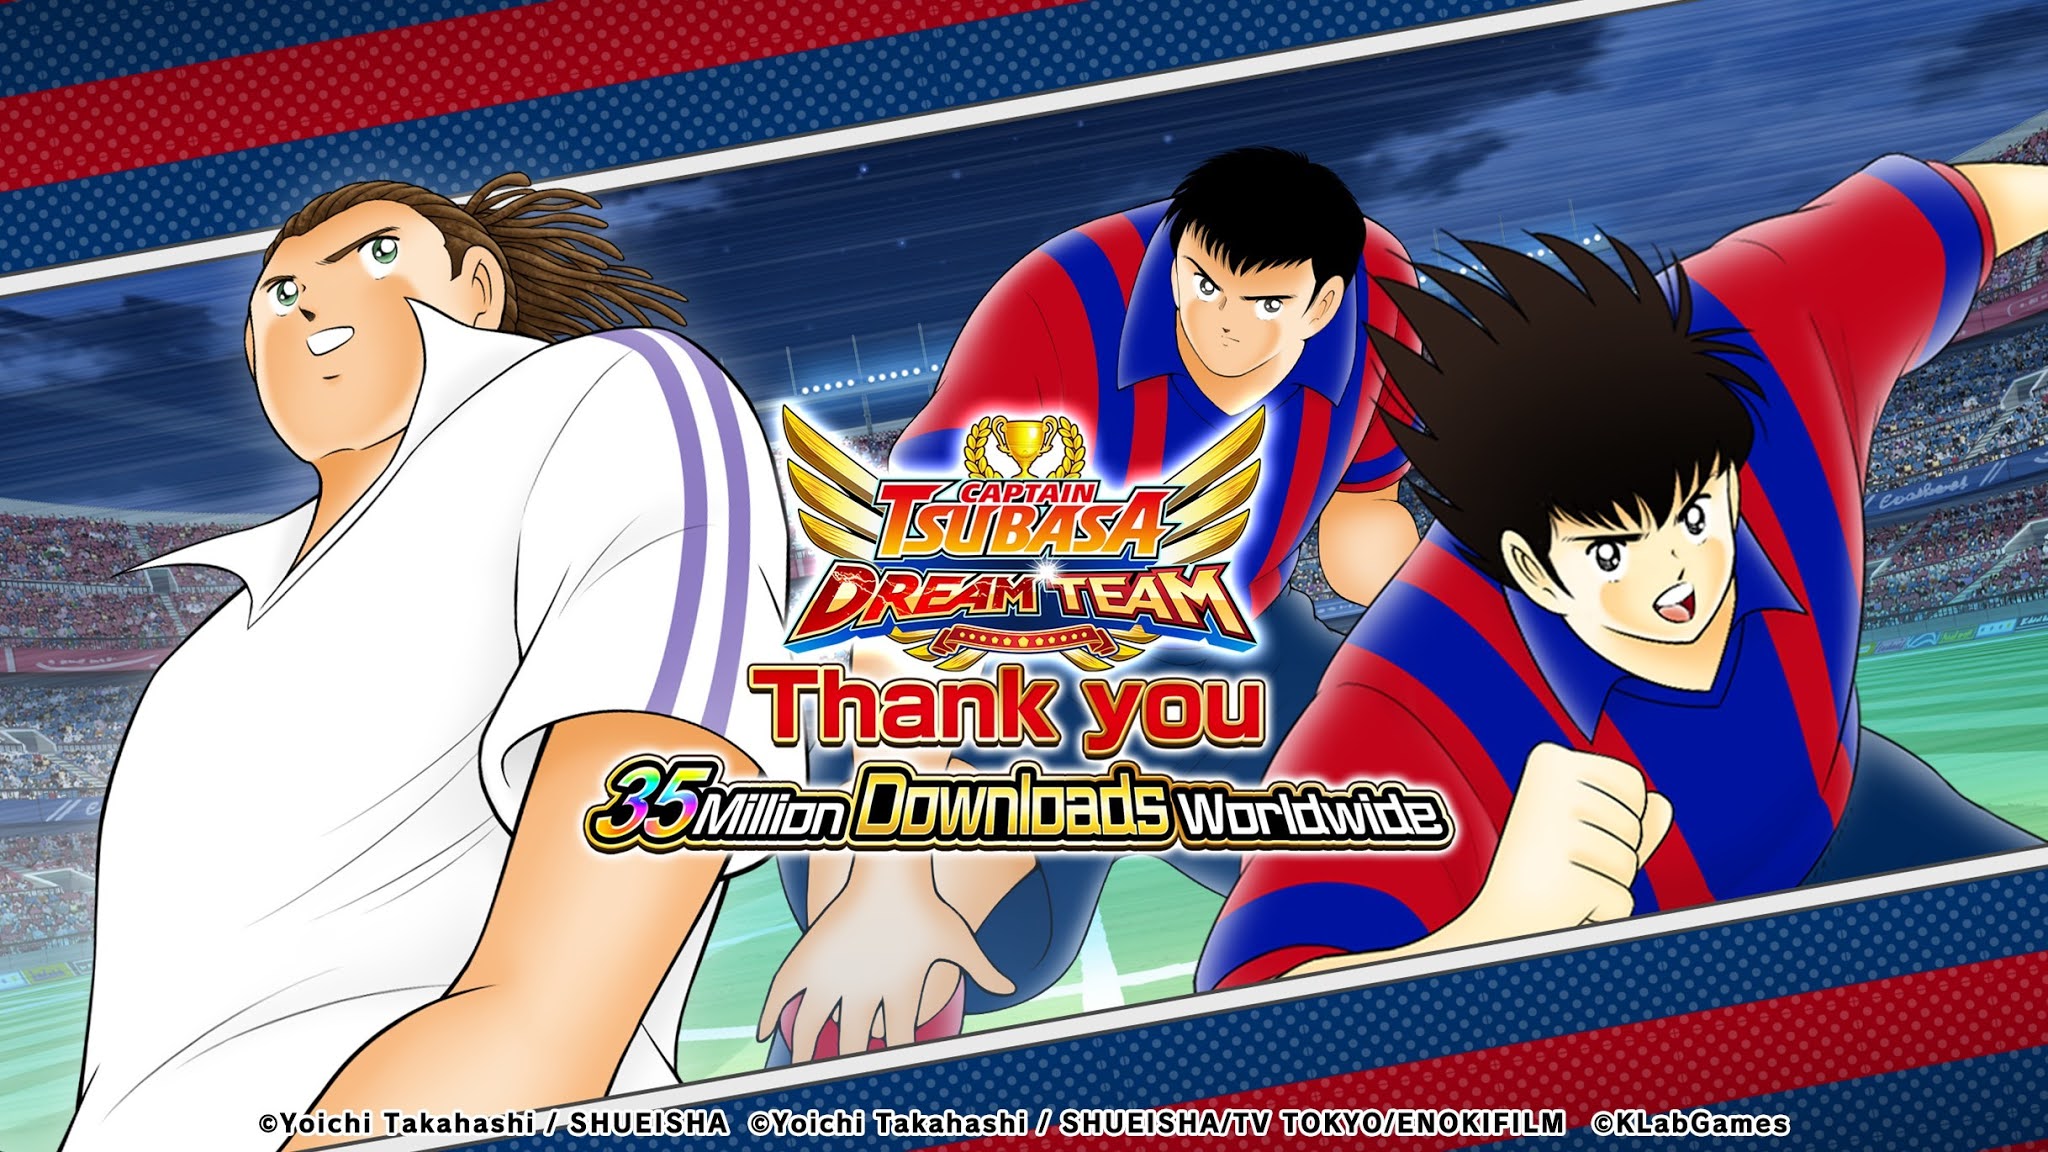 35 million downloads of Captain Tsubasa online game